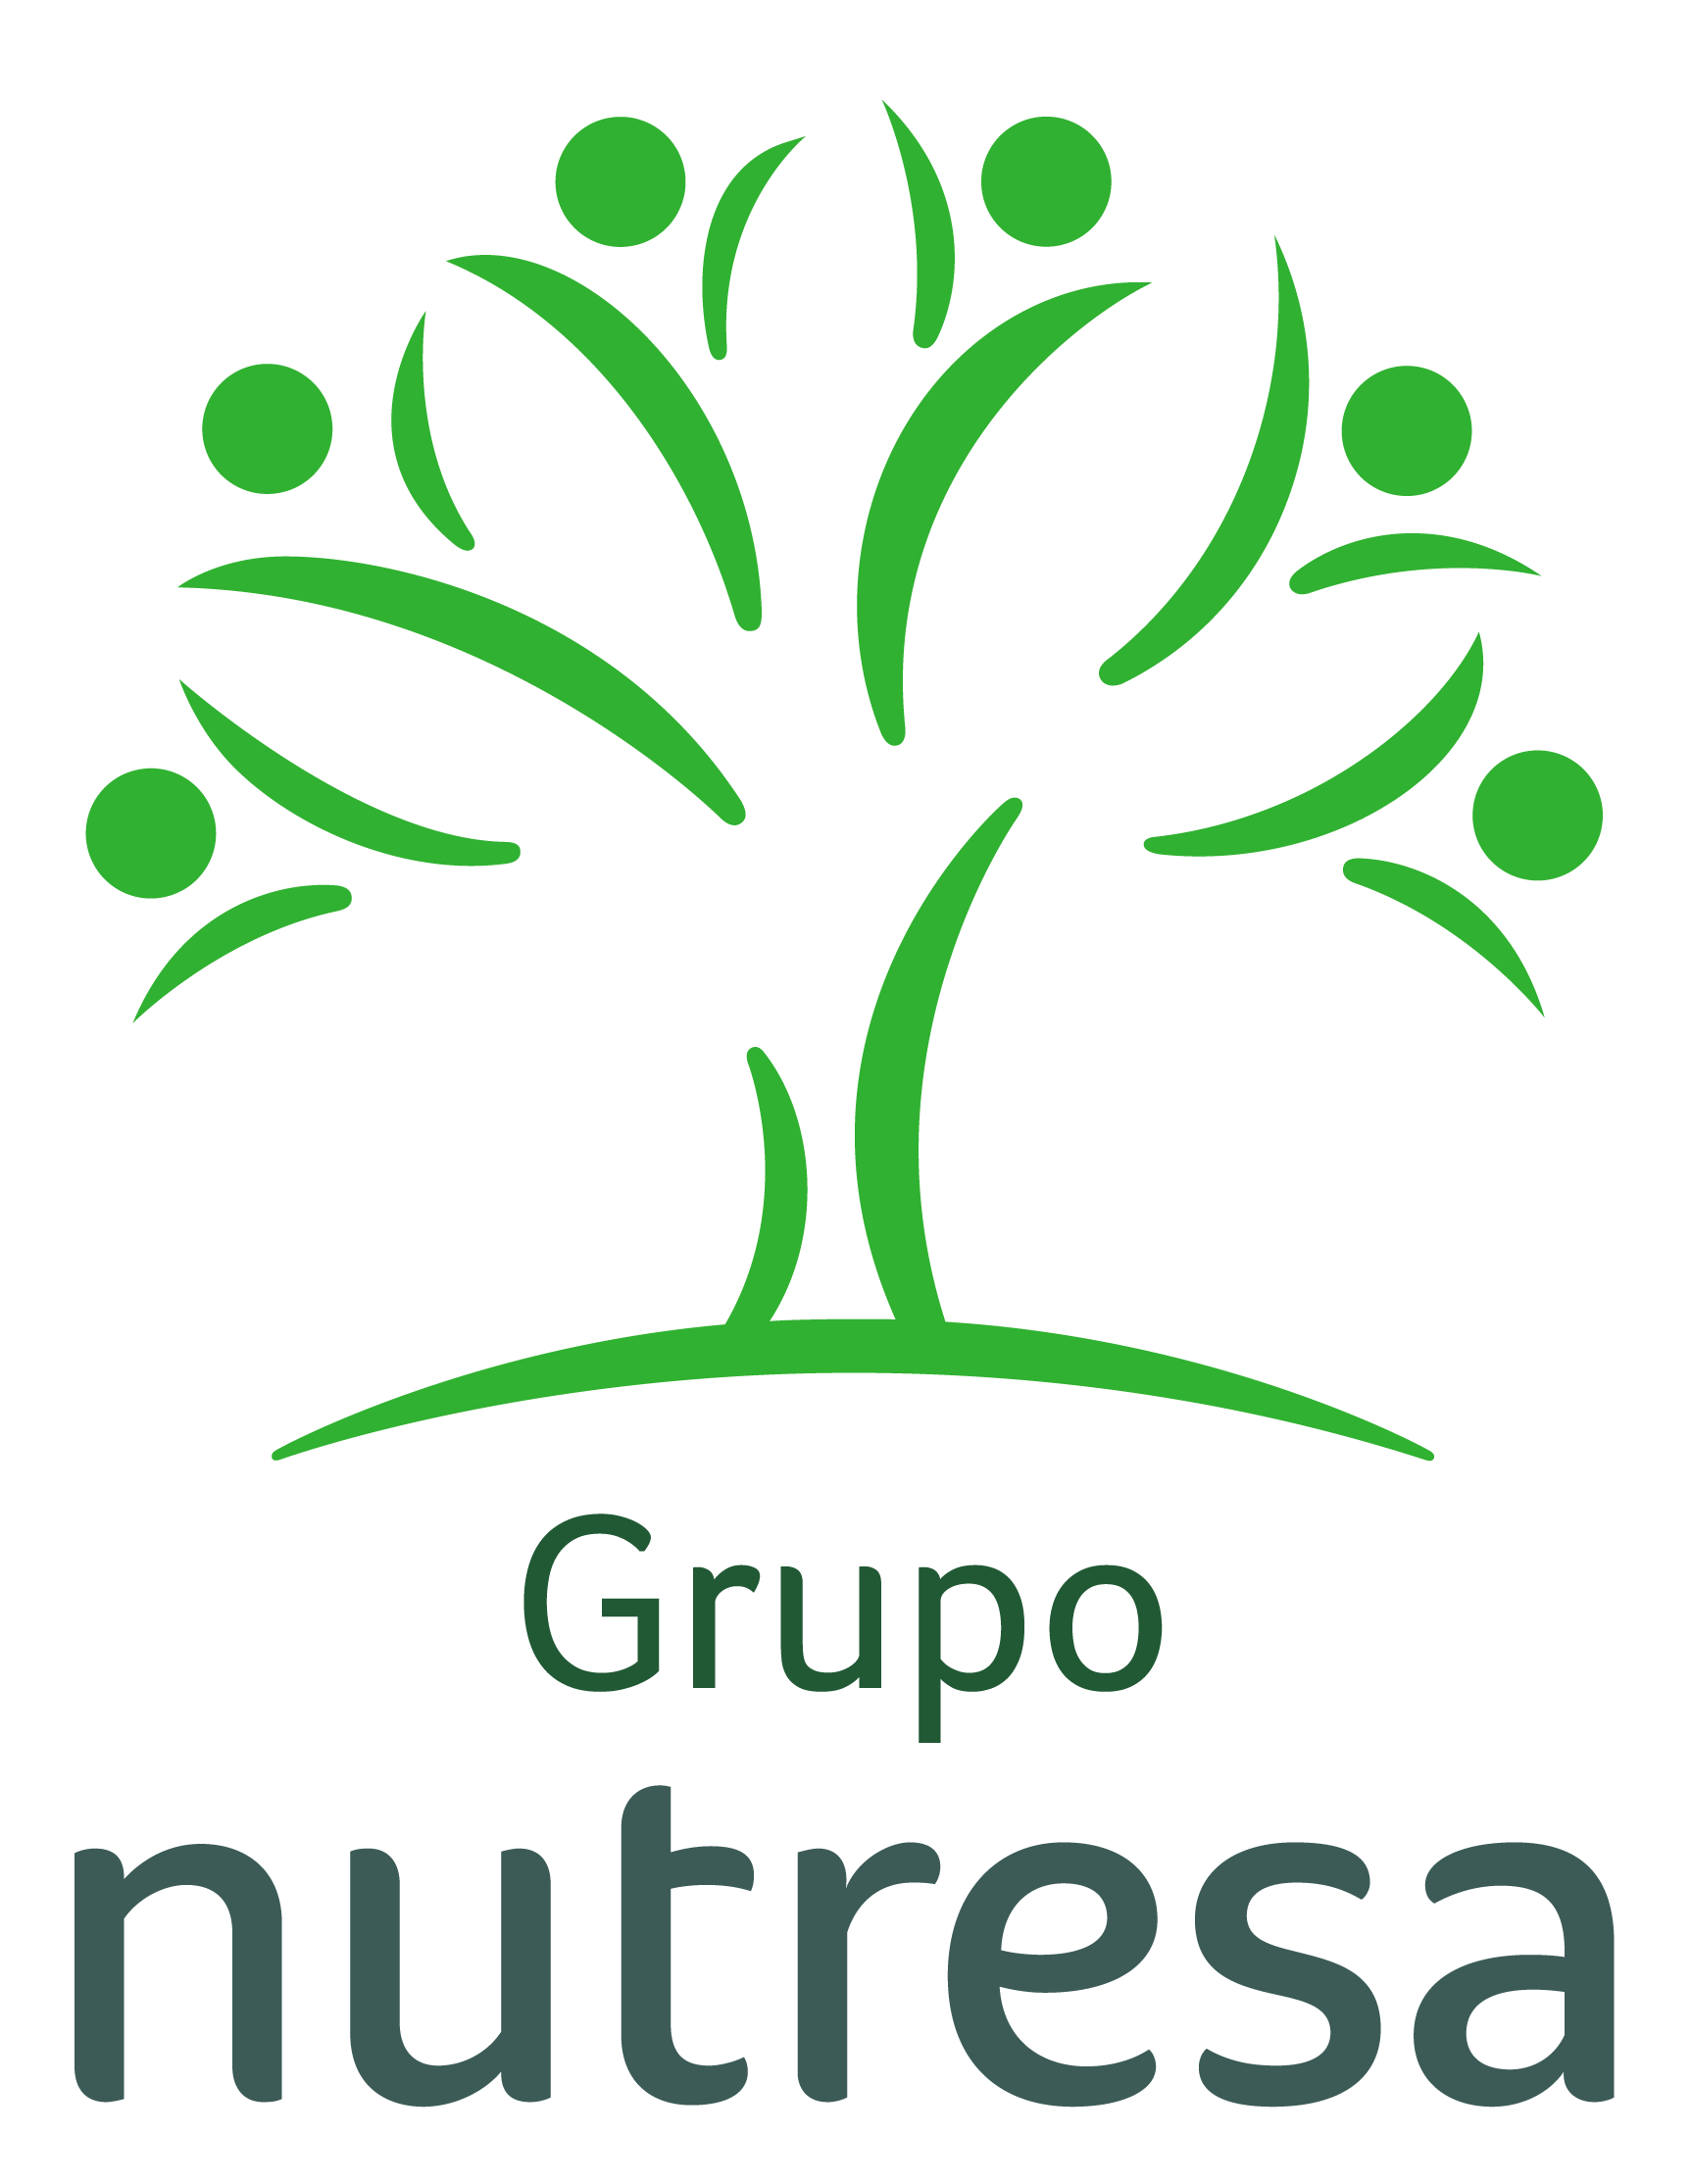 Compania Nacional de Chocolates, subsidiary of Grupo Nutresa S.A.